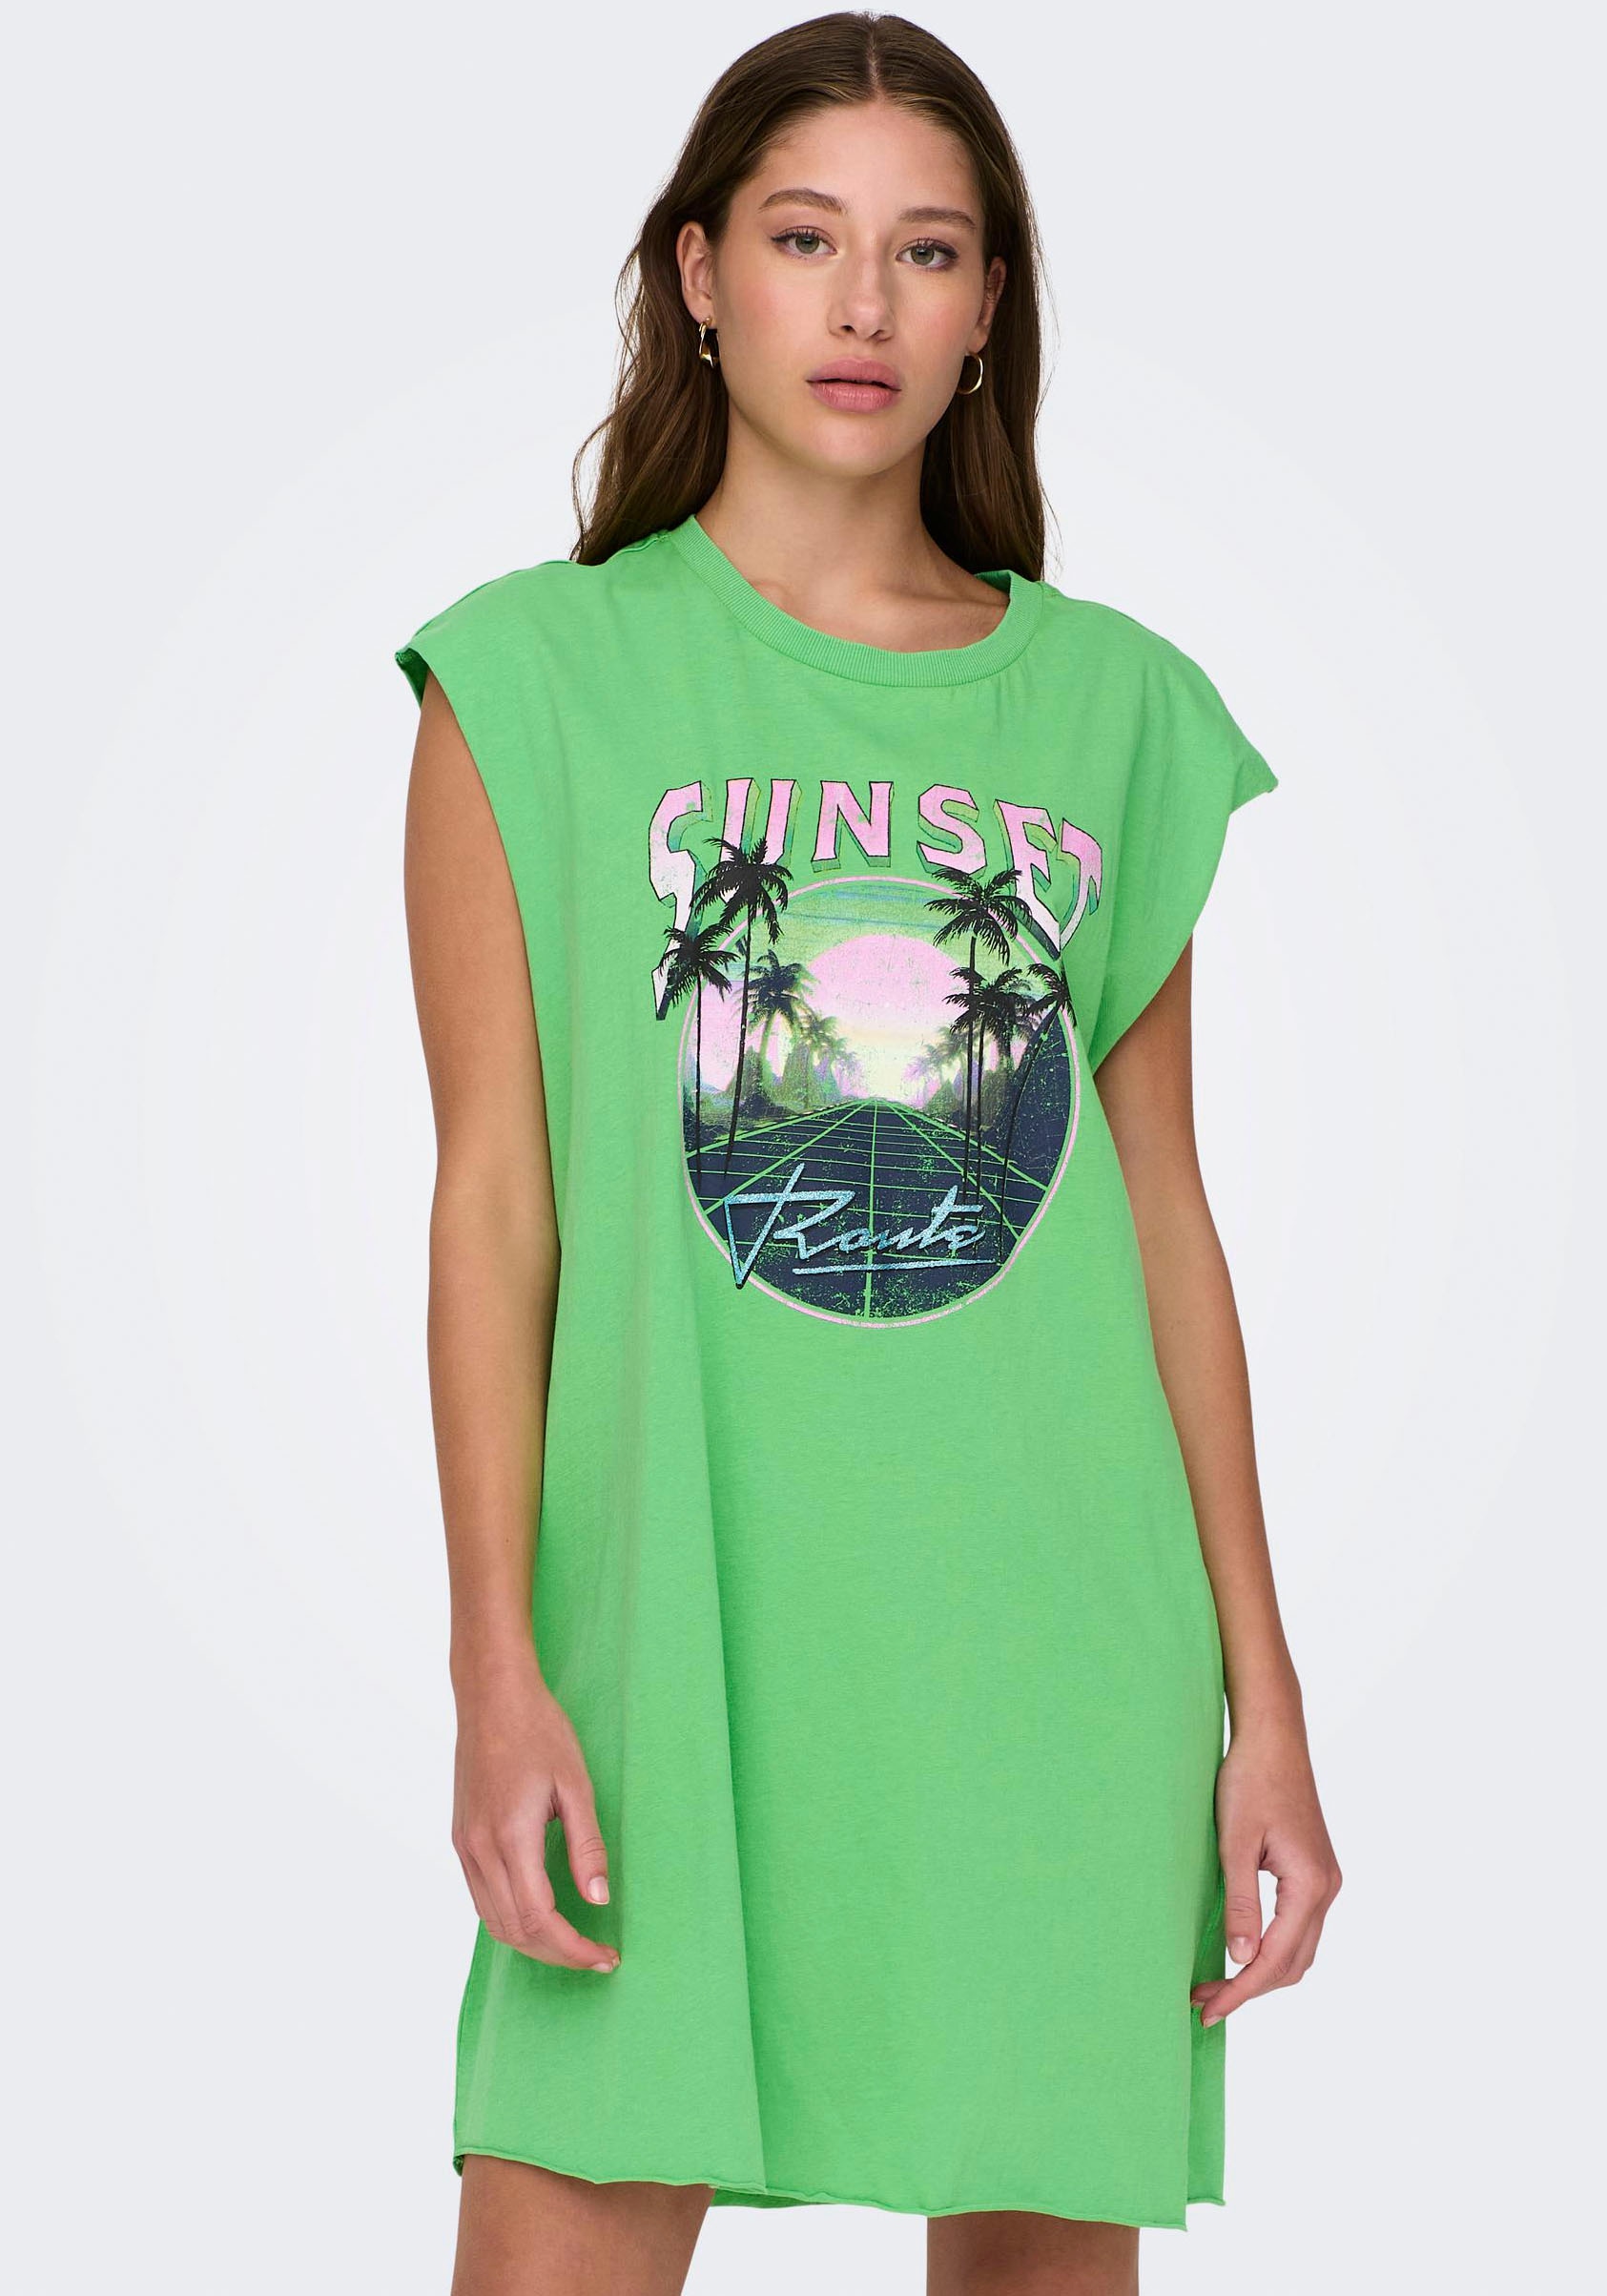 shoppen Shirtkleider online